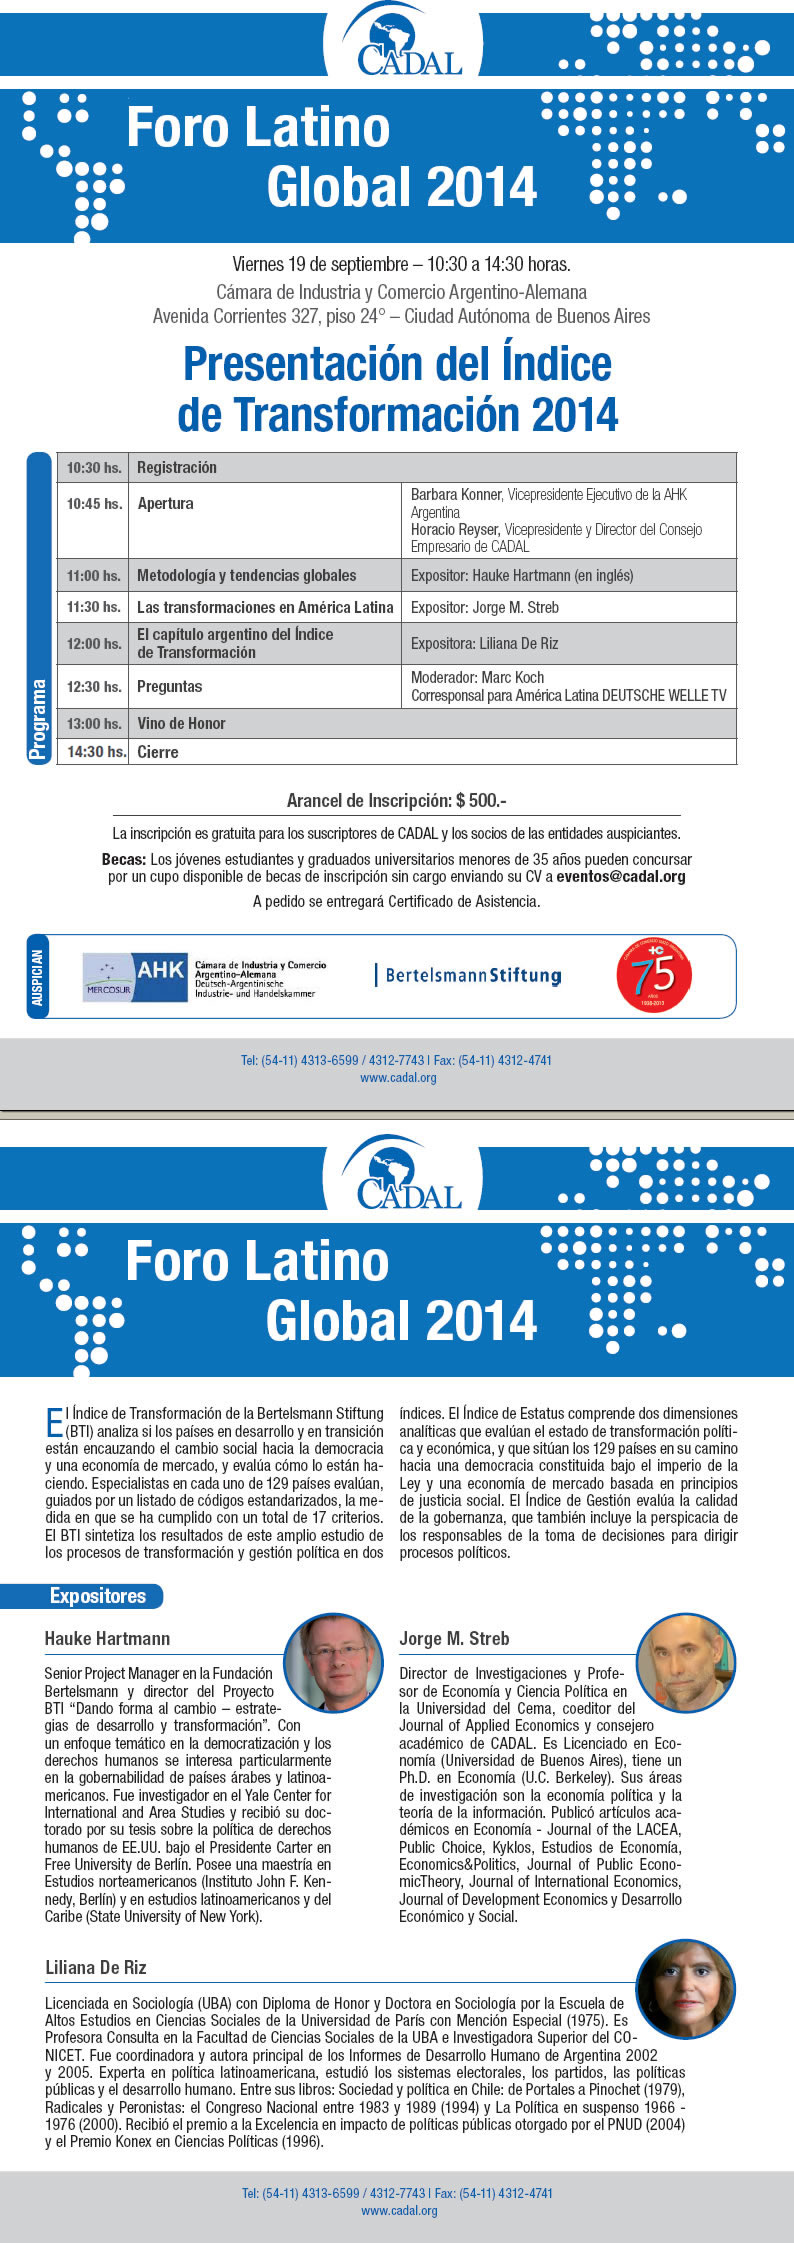 Foro Latino Global 2014 - Presentación del Índice de Transformación 2014